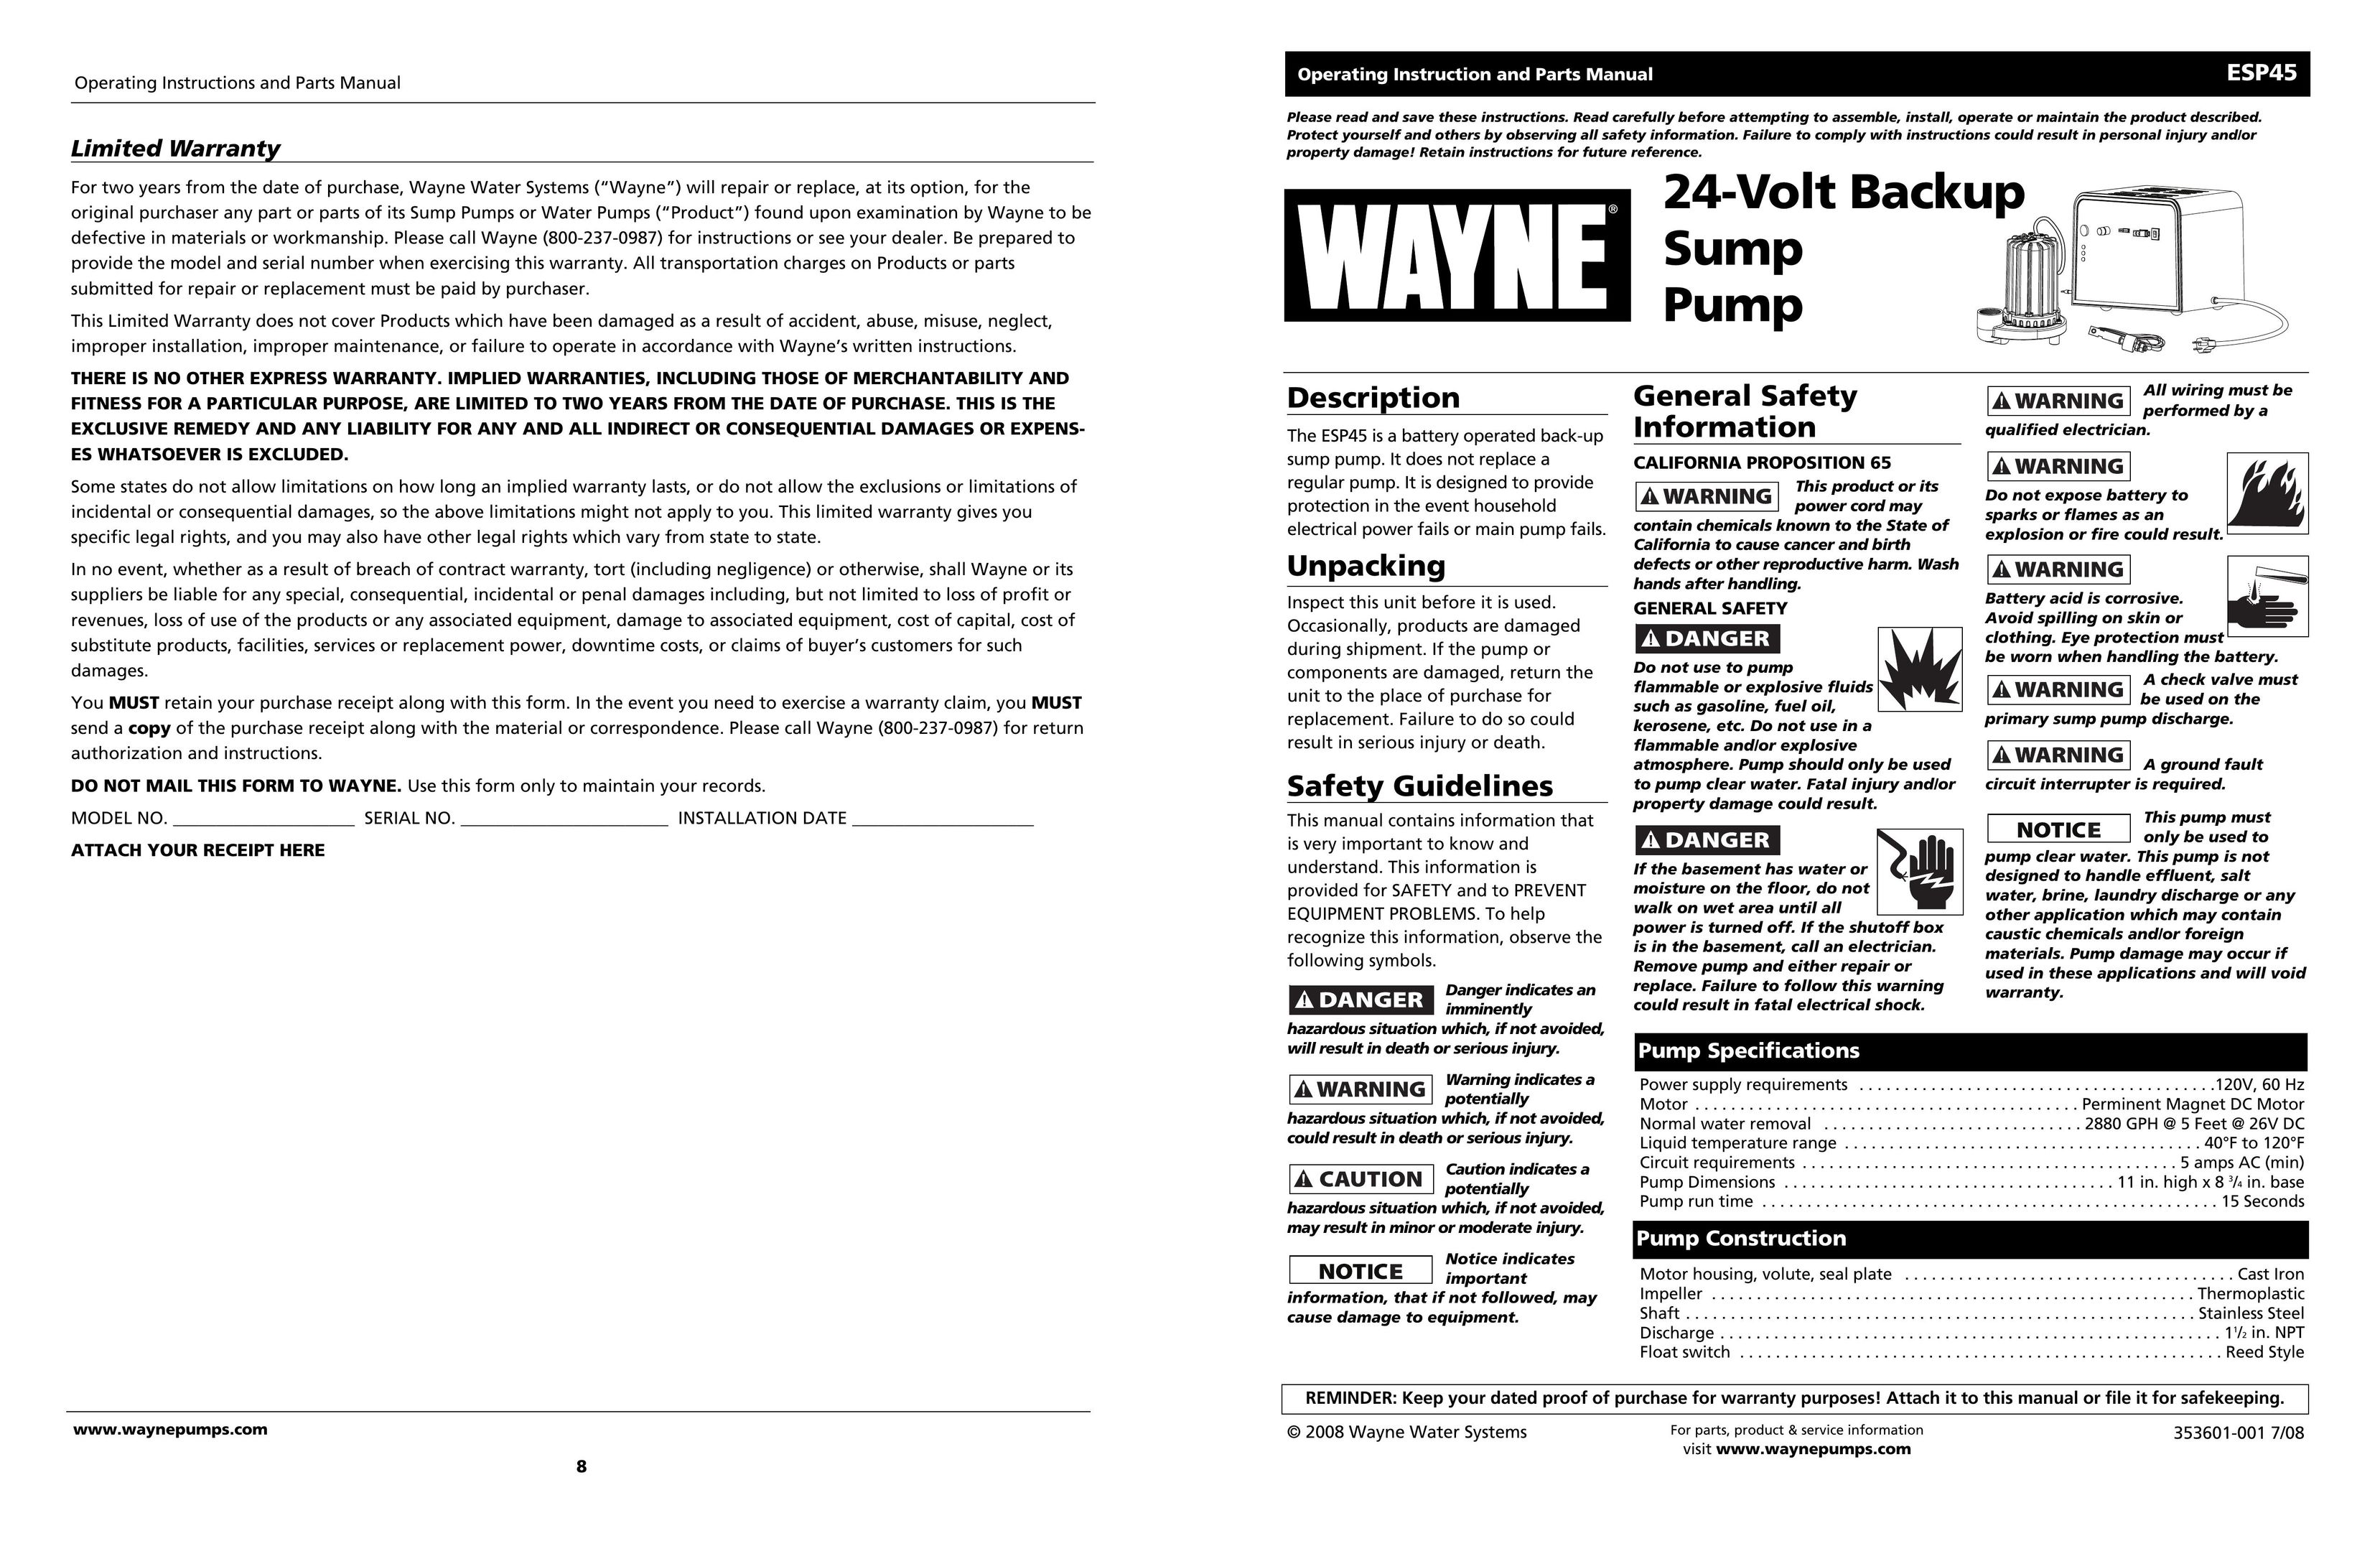 Wayne ESP45 Plumbing Product User Manual